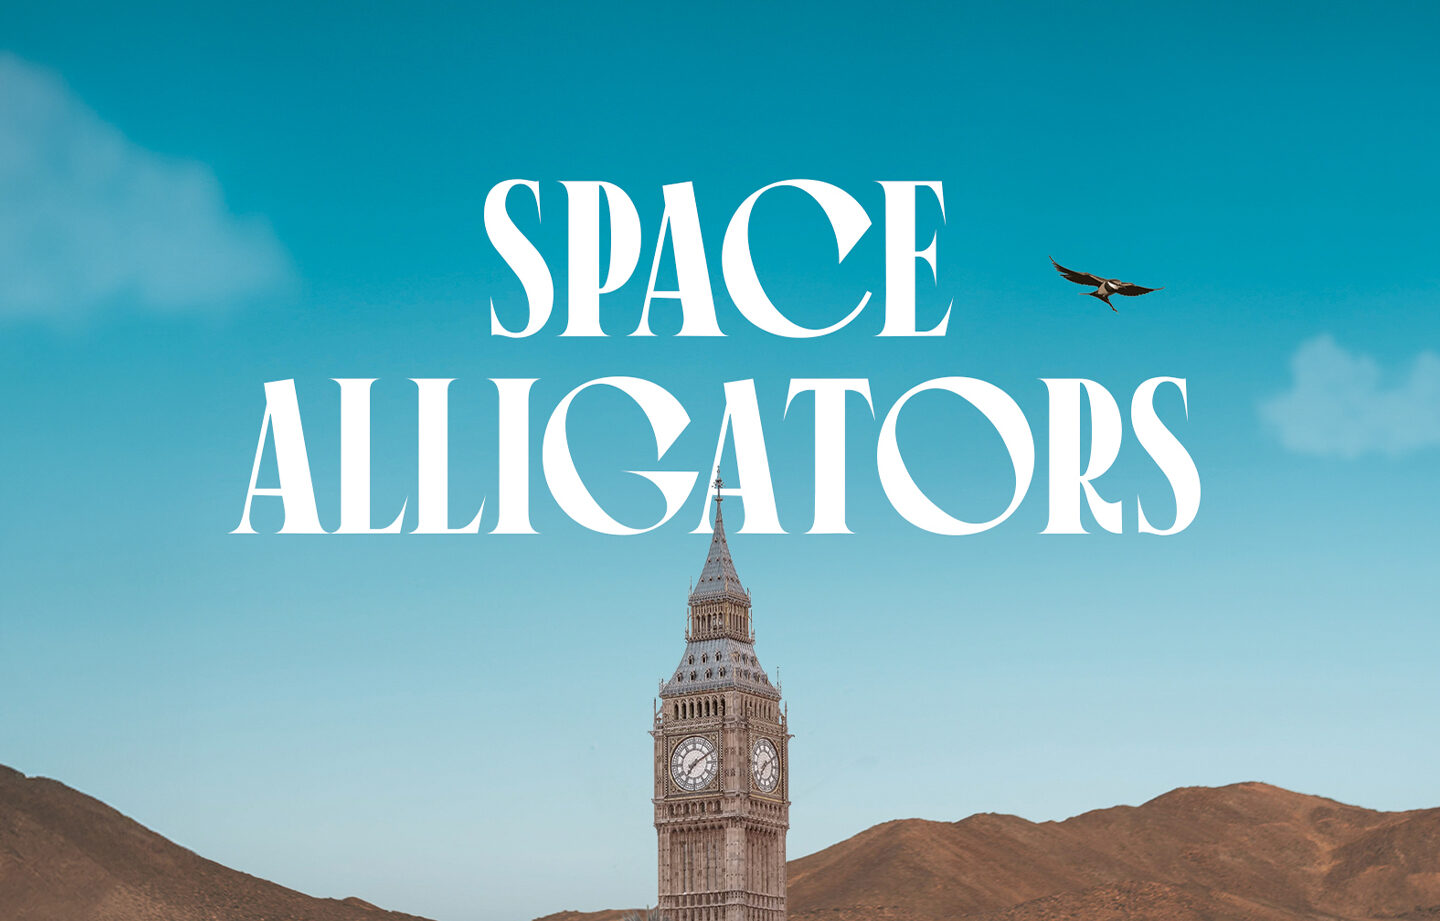 Premeir album london tropical Space Alligators